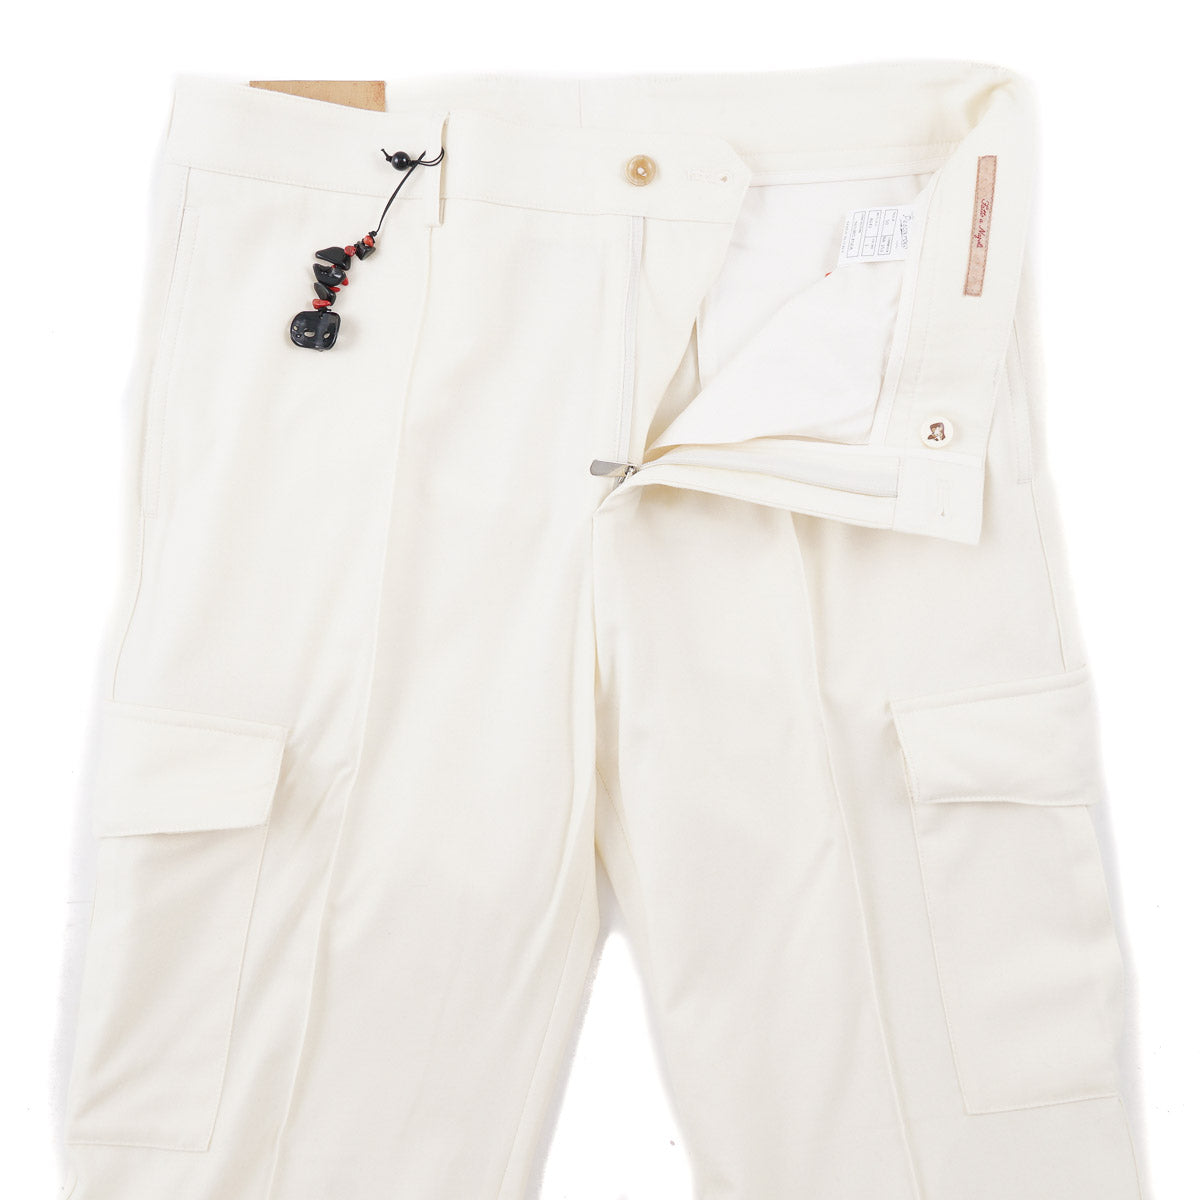 Marco Pescarolo Cashmere Cargo Pants - Top Shelf Apparel